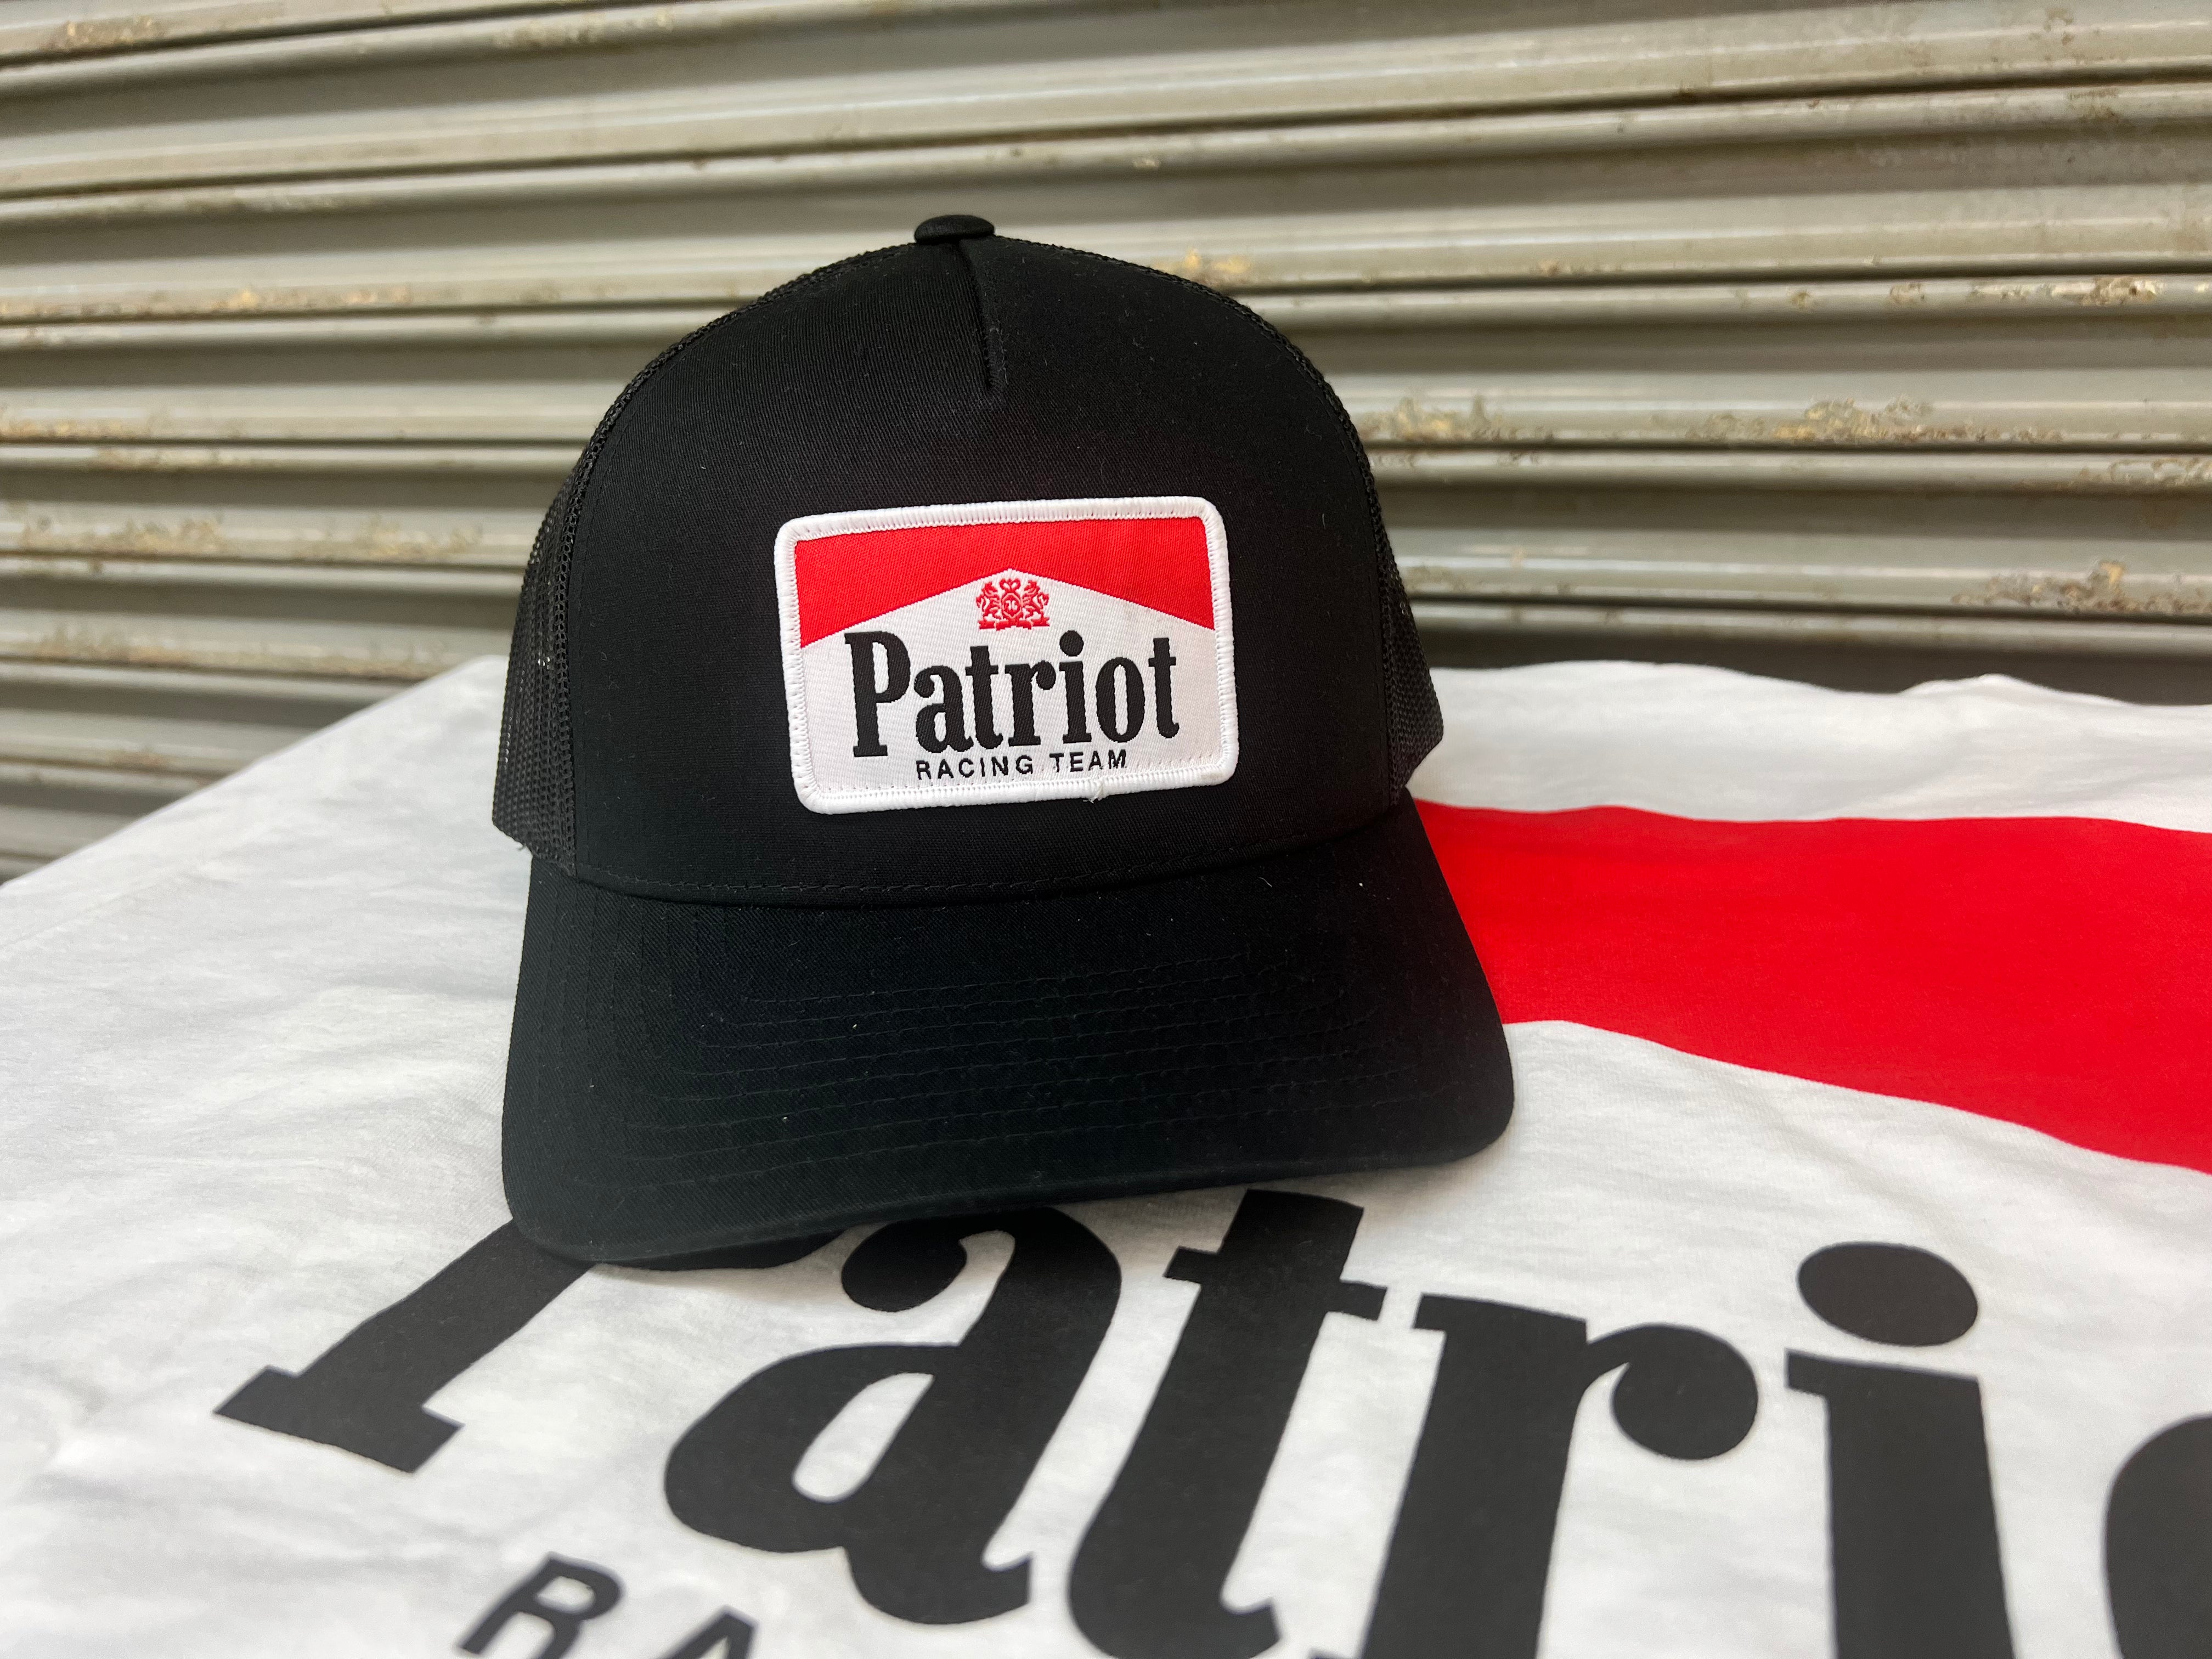 Patriot Racing Team Hat Black